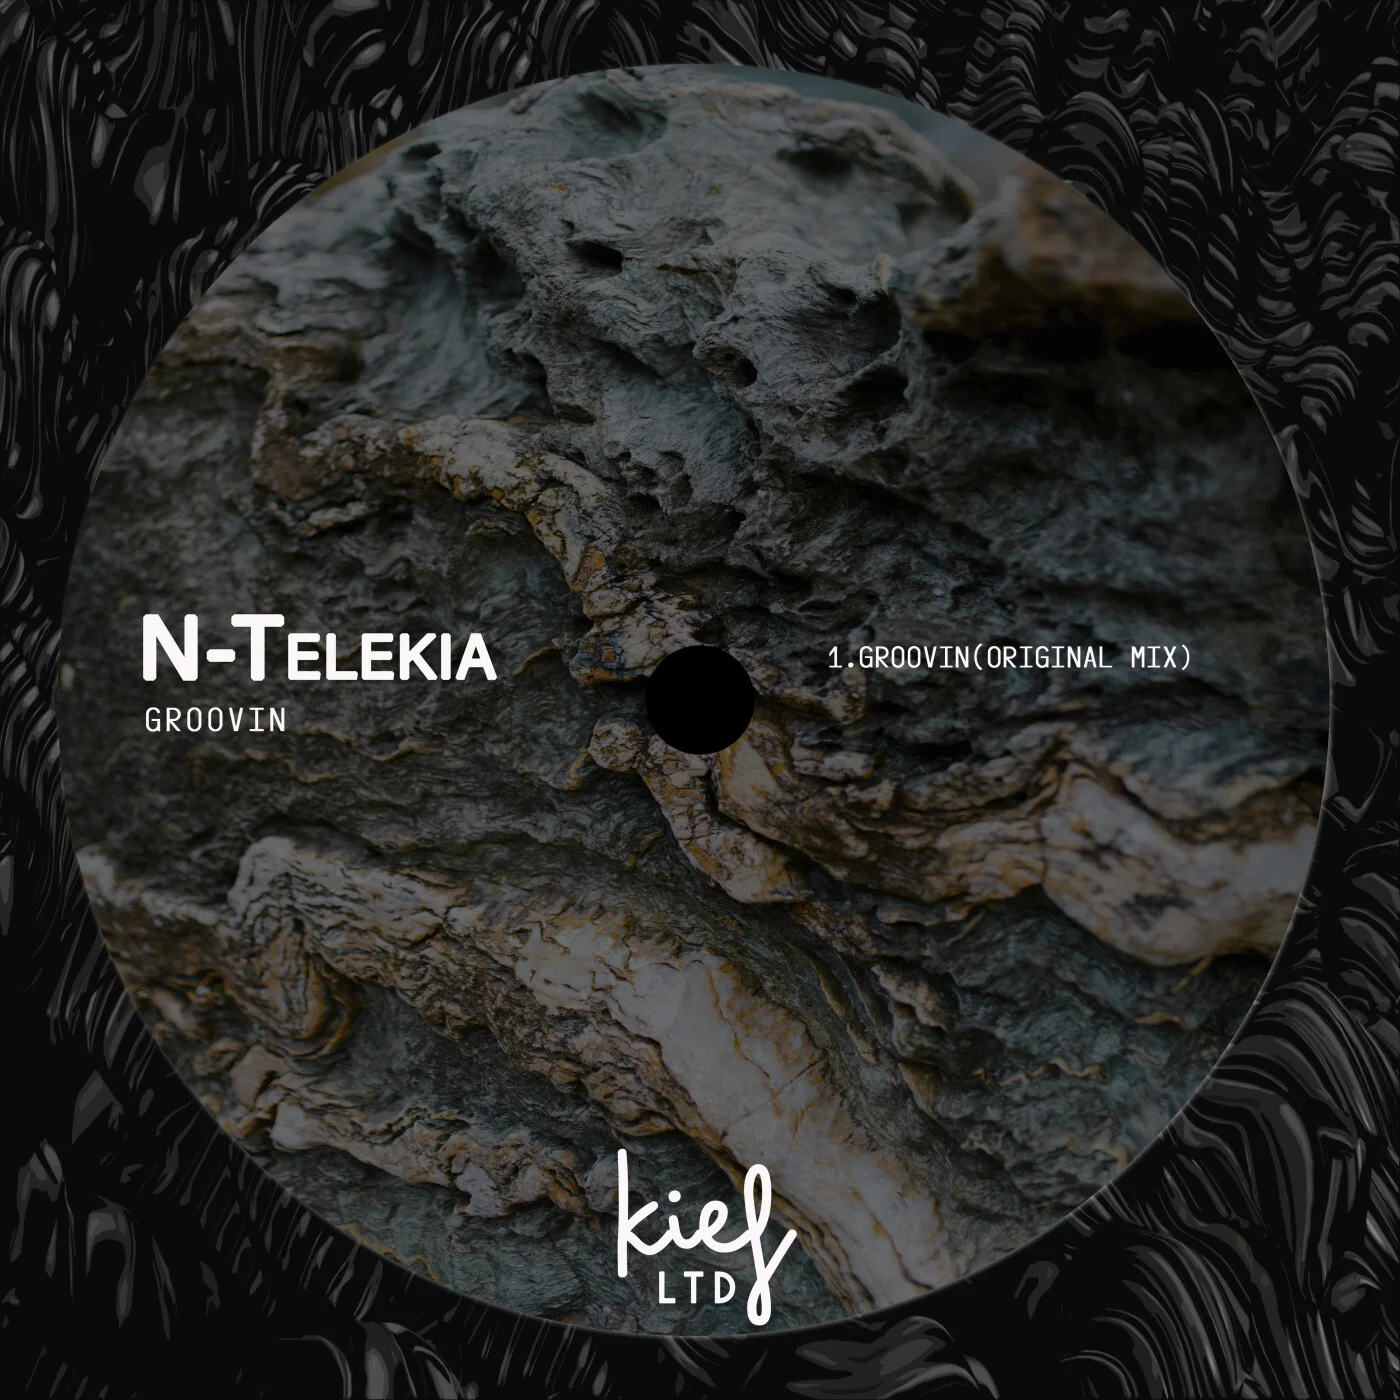 N-telekia - Groovin (Original Mix)